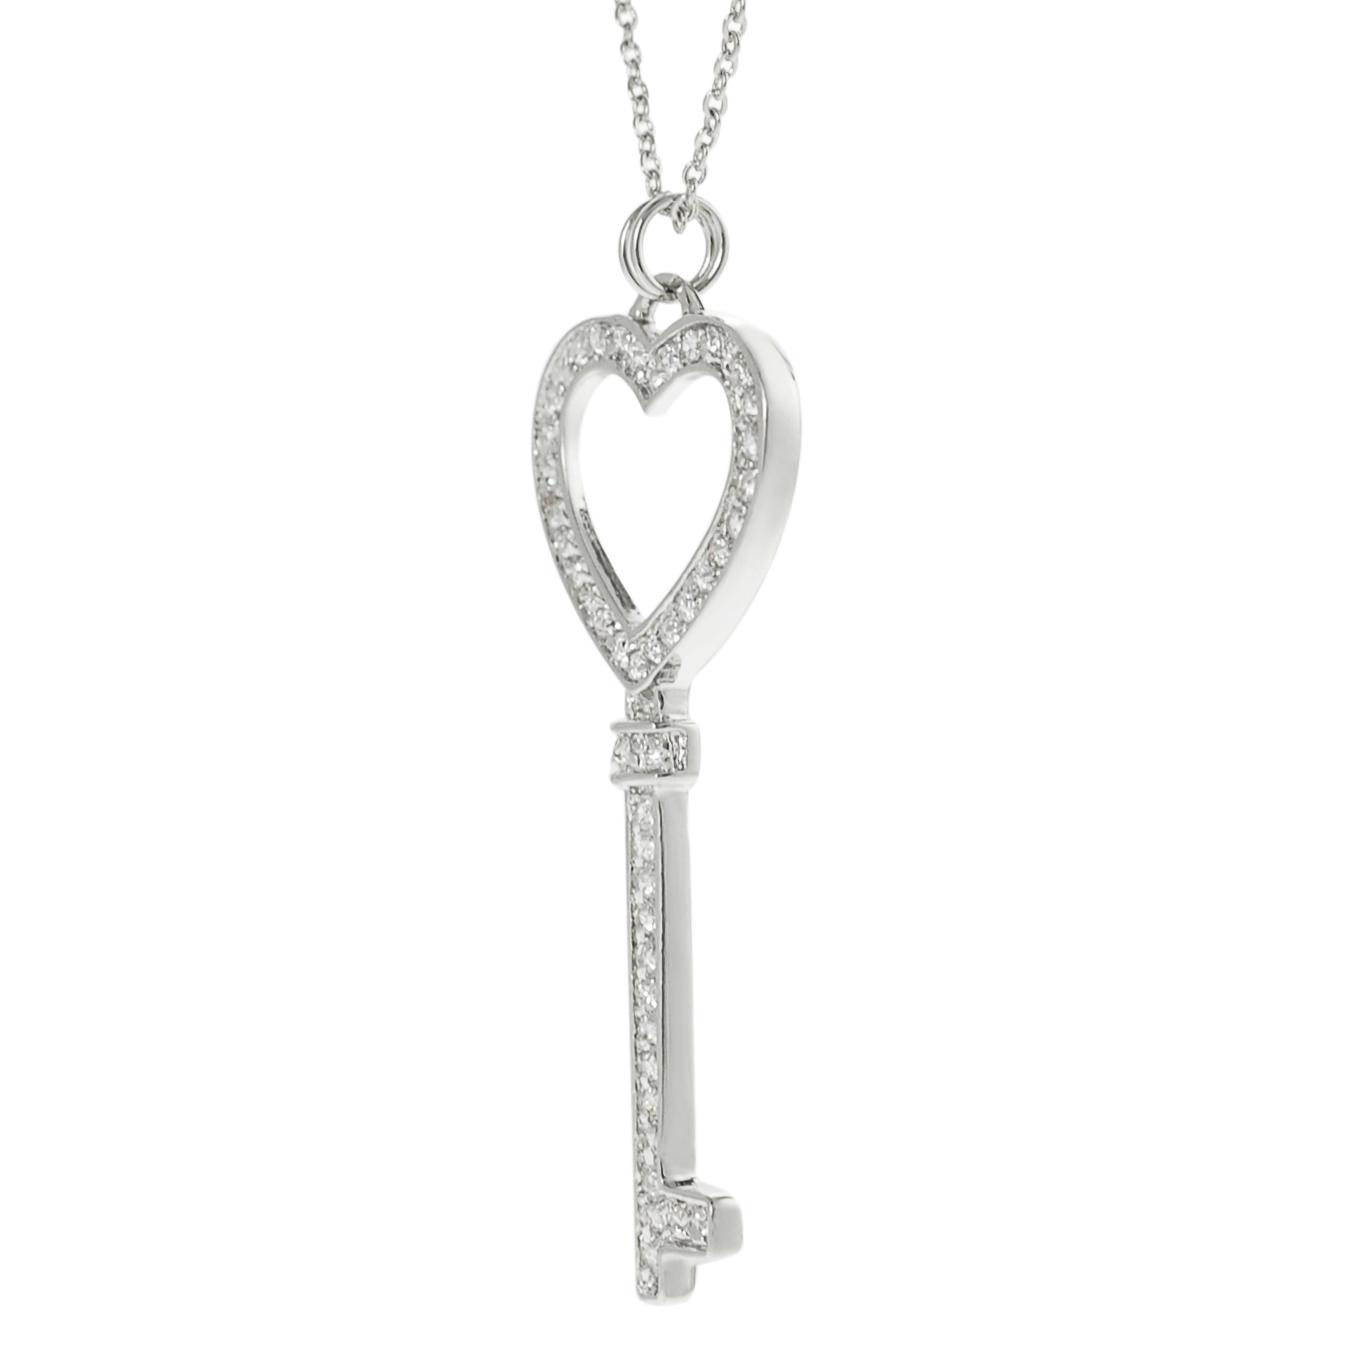 Journee Collection Silvertone Pave set CZ Heart Key Necklace